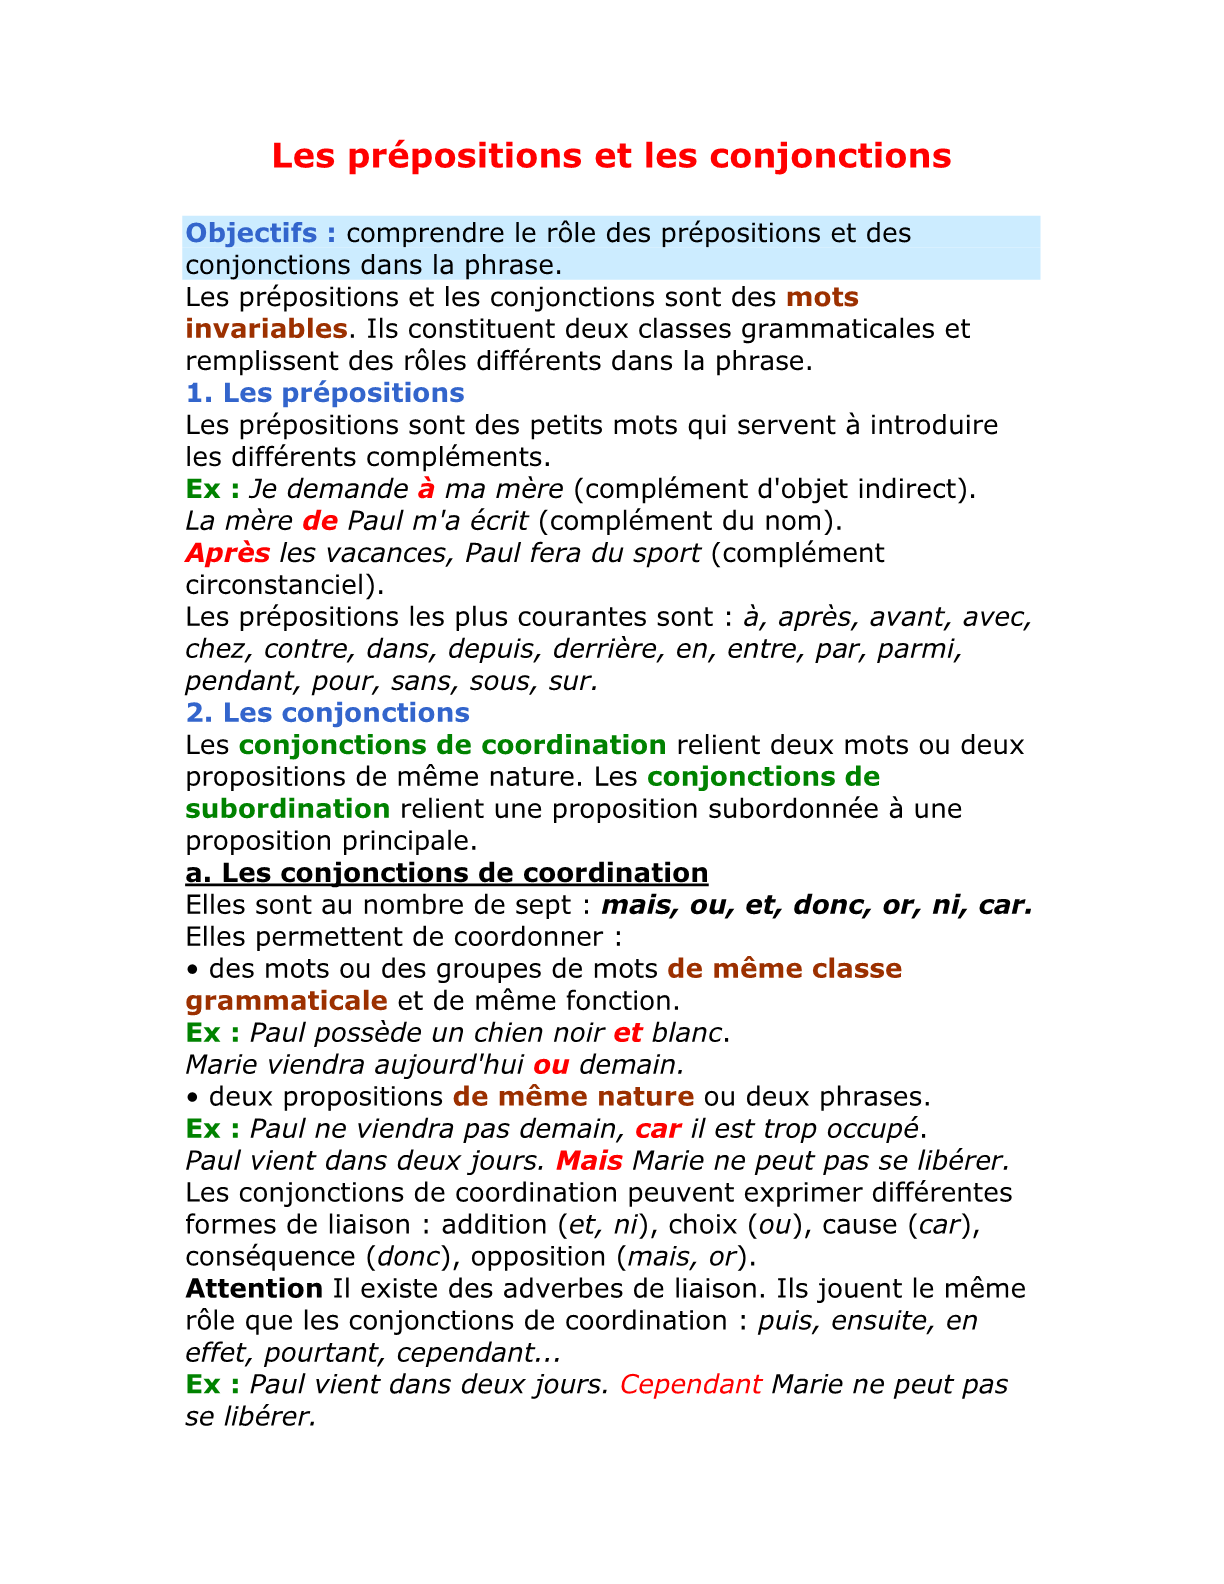 درس Les prépositions et les conjonctions للسنة الأولى إعدادي